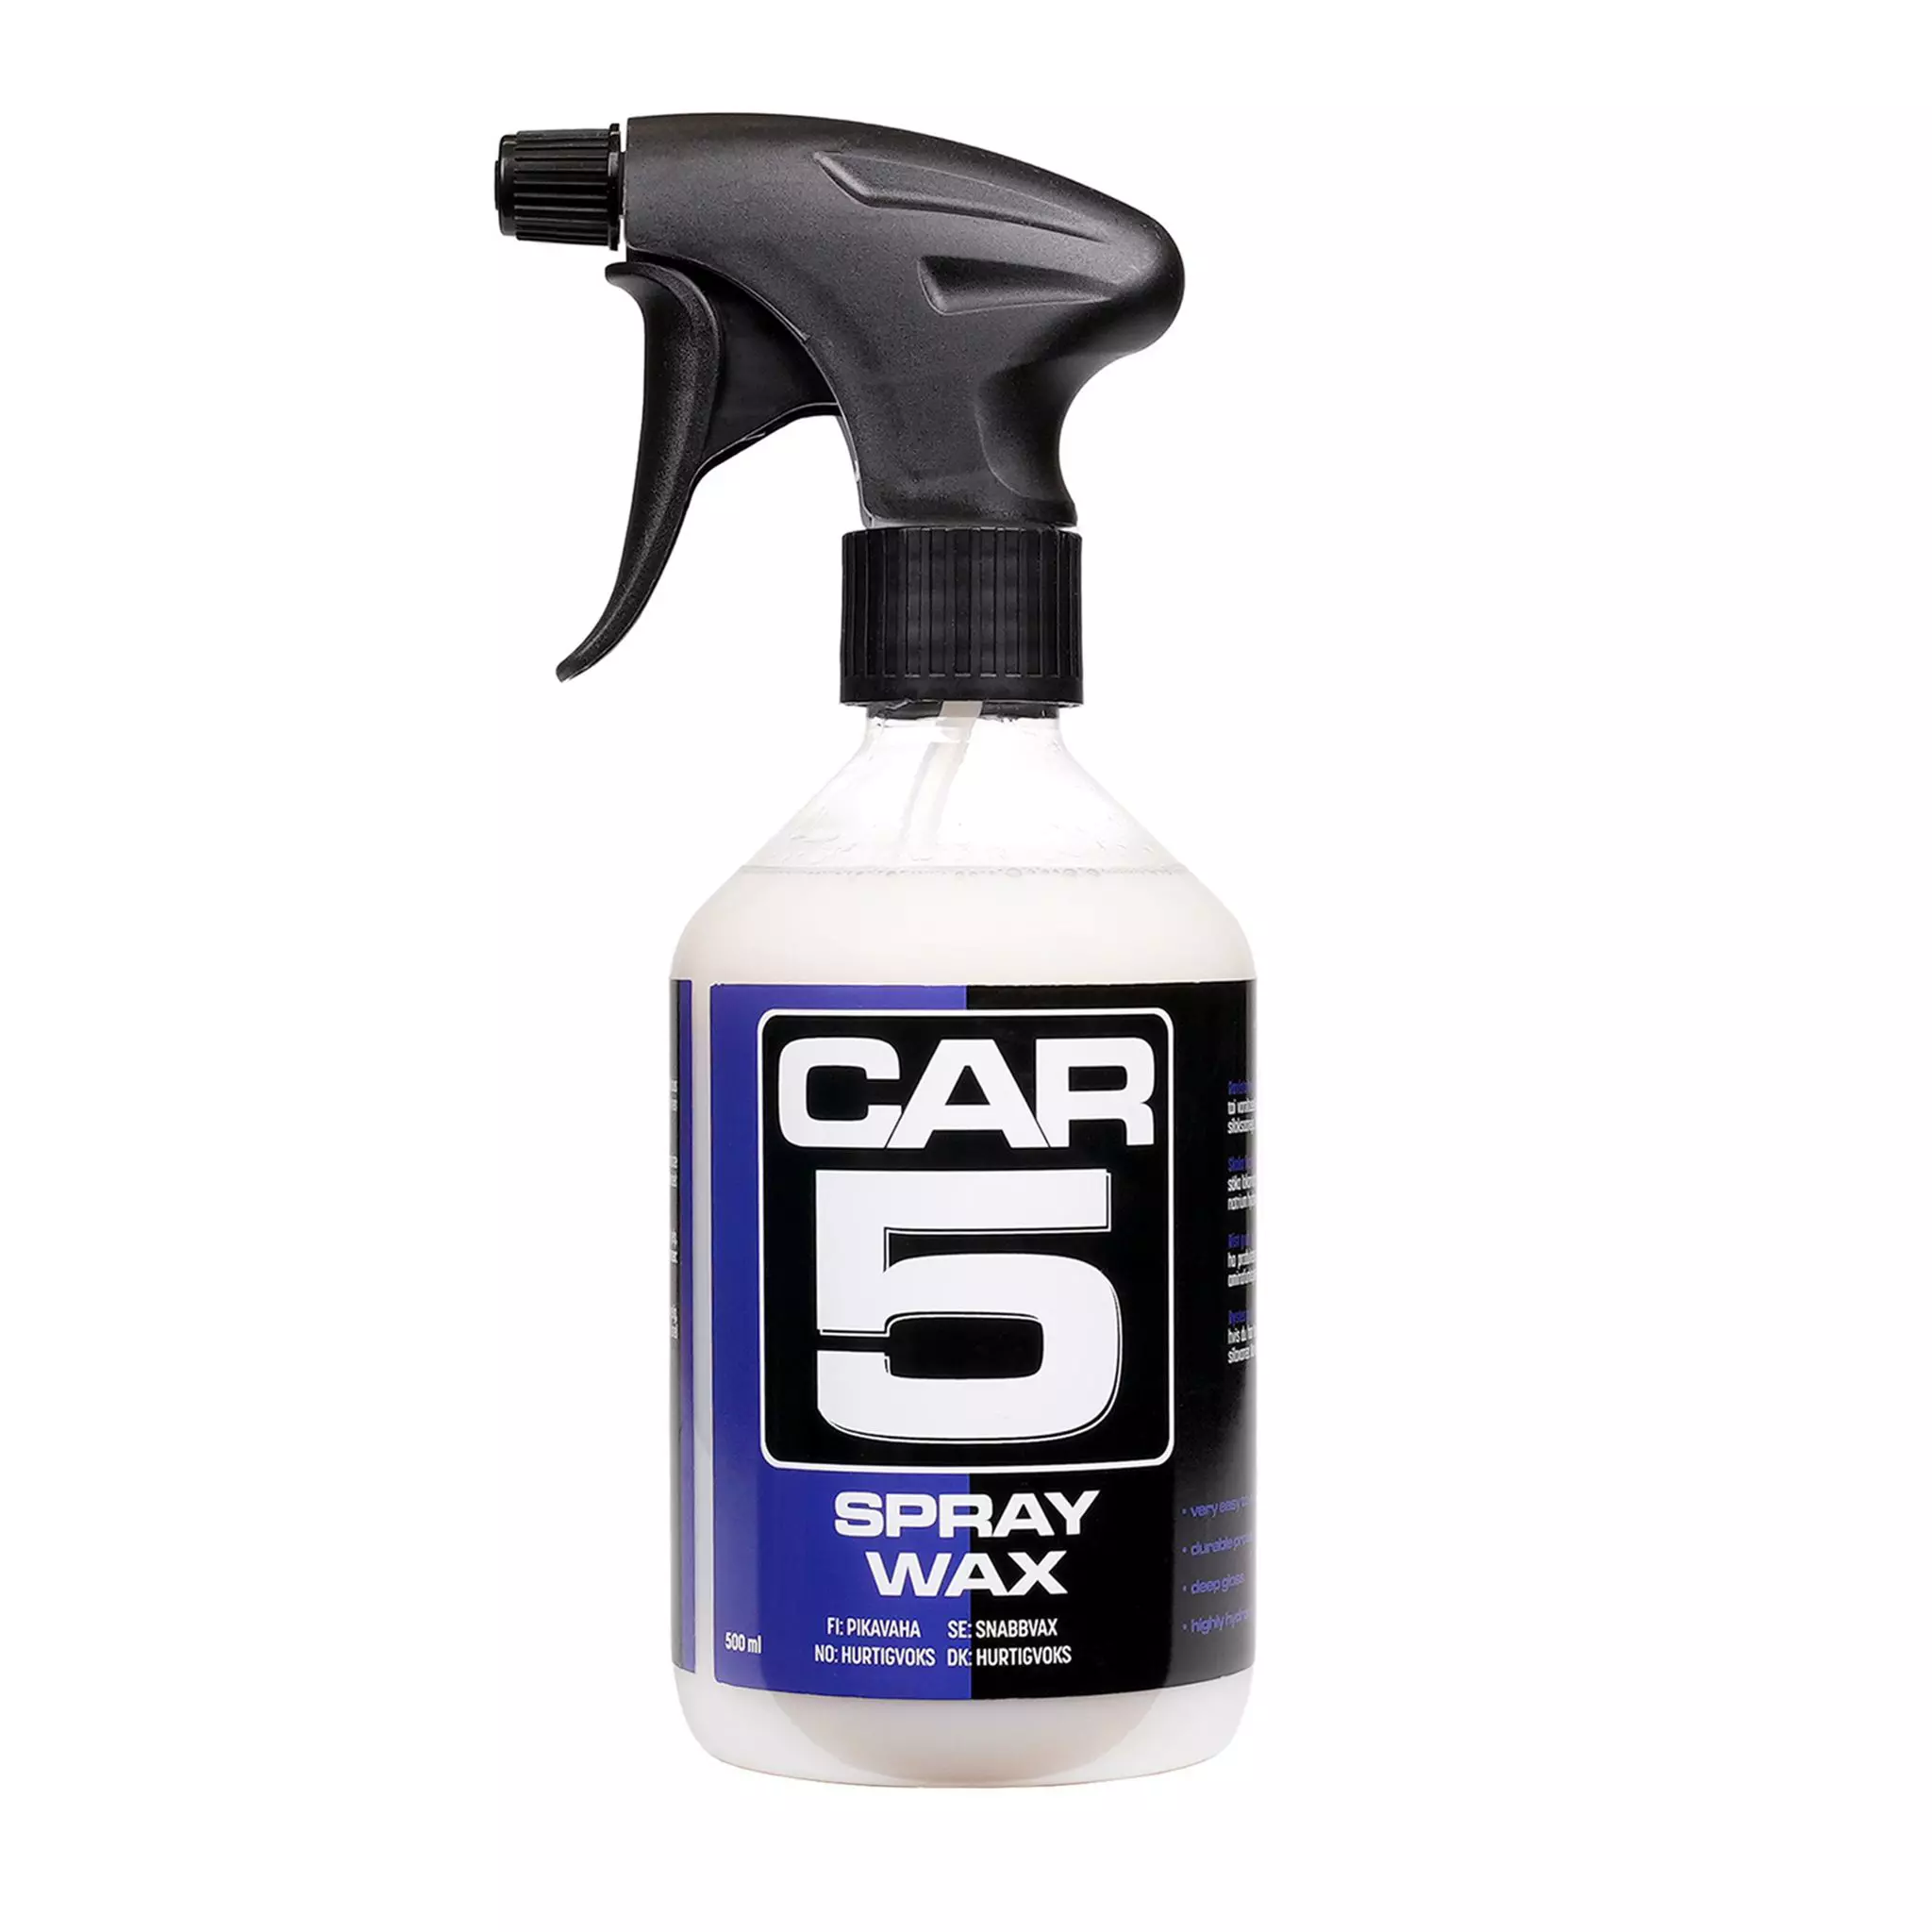 Pikavaha Car5 Spray Wax, Ml